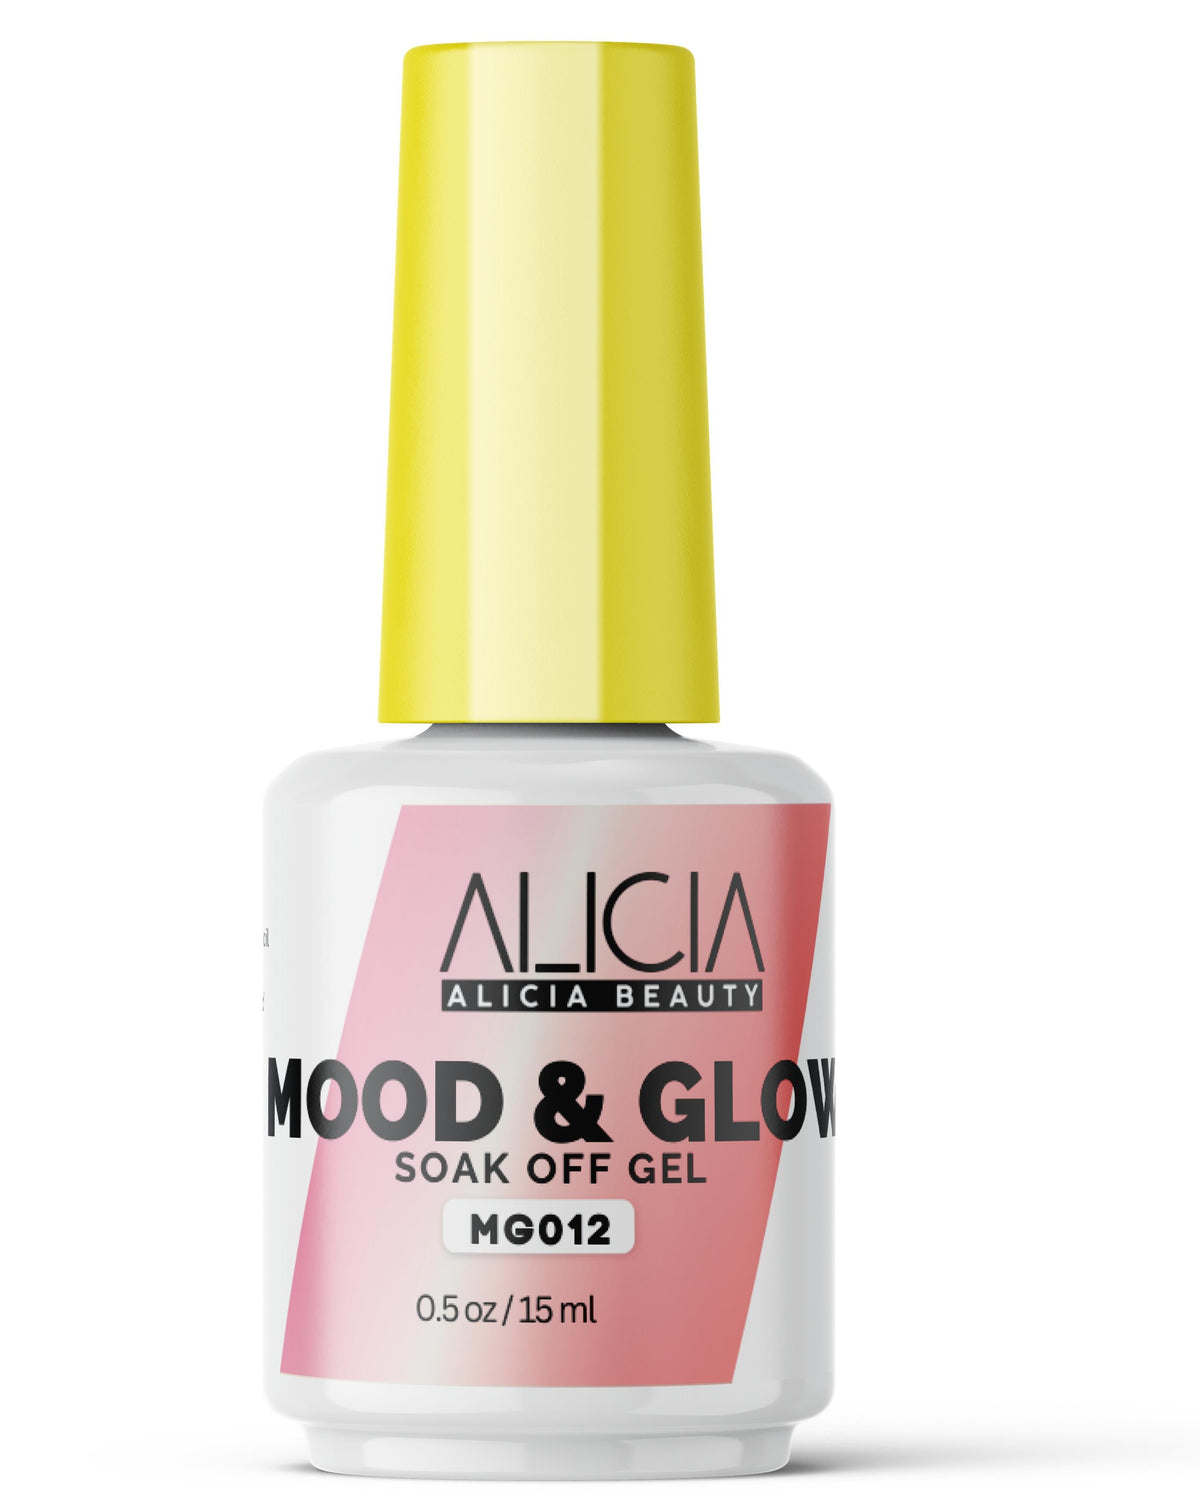 Alicia Beauty - Glow & Mood Soak Off Gel - MG012 (0.5oz/15ml)-GEL POLISH SOAK-OFF-ALICIA BEAUTY- Nail Supply American Gel Polish - Phuong Ni